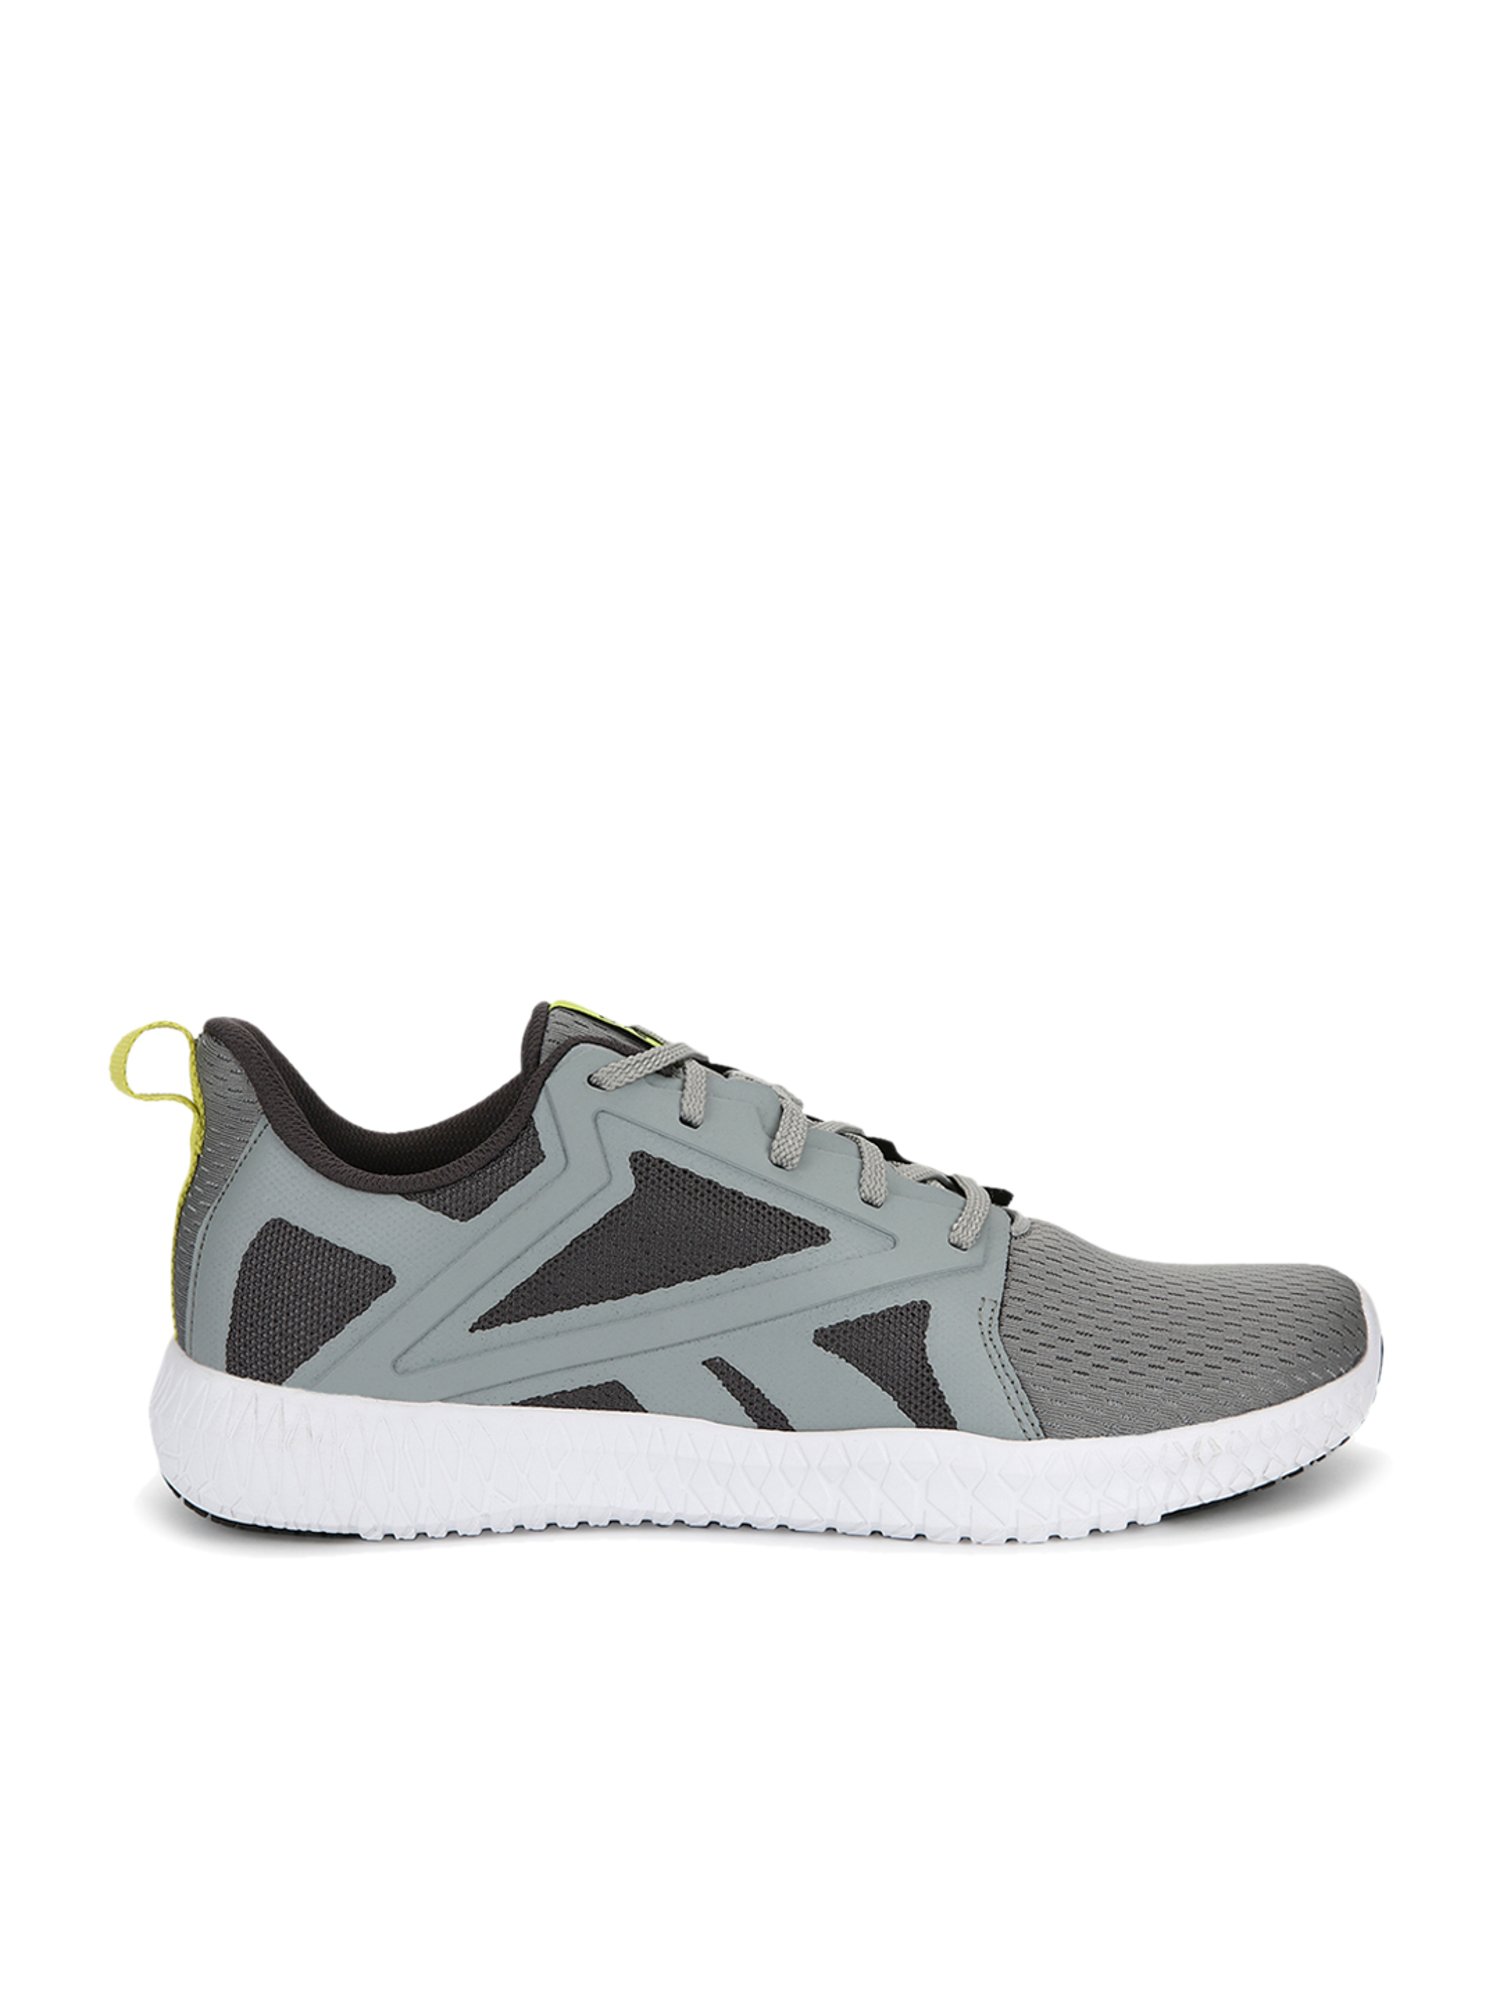 Buy Reebok Men's Varys TR Ash Grey Training Shoes for Men at Price @ Tata CLiQ